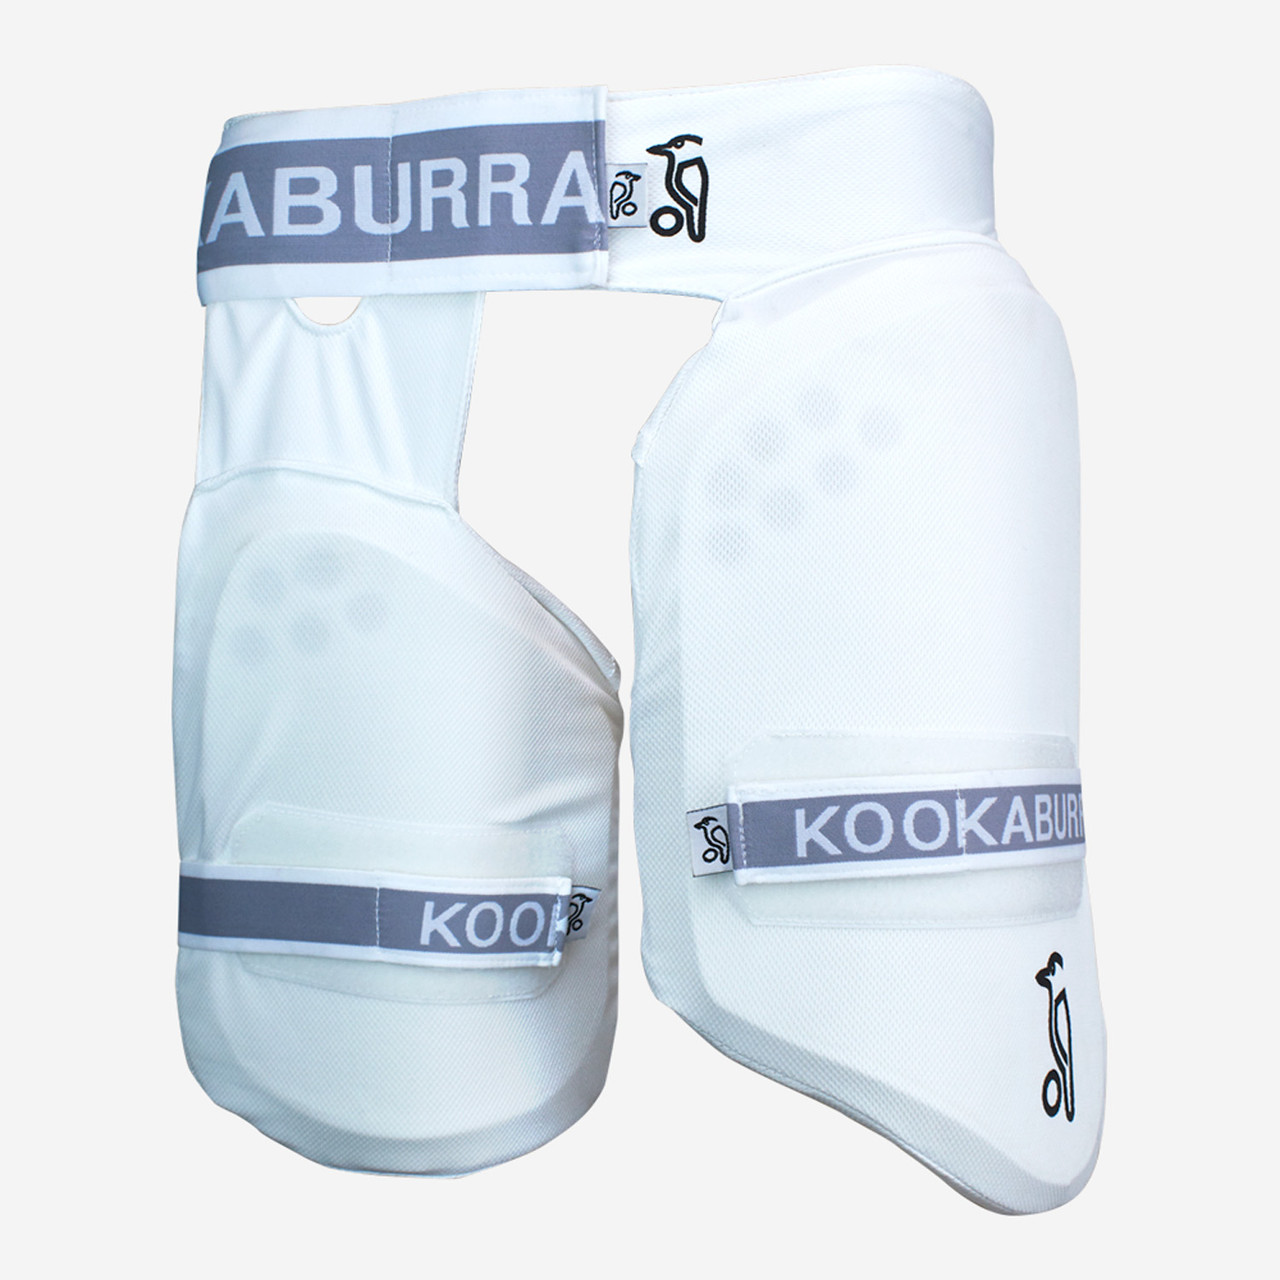 KOOKABURRA Childrens Pro Players Thigh Guard Protection